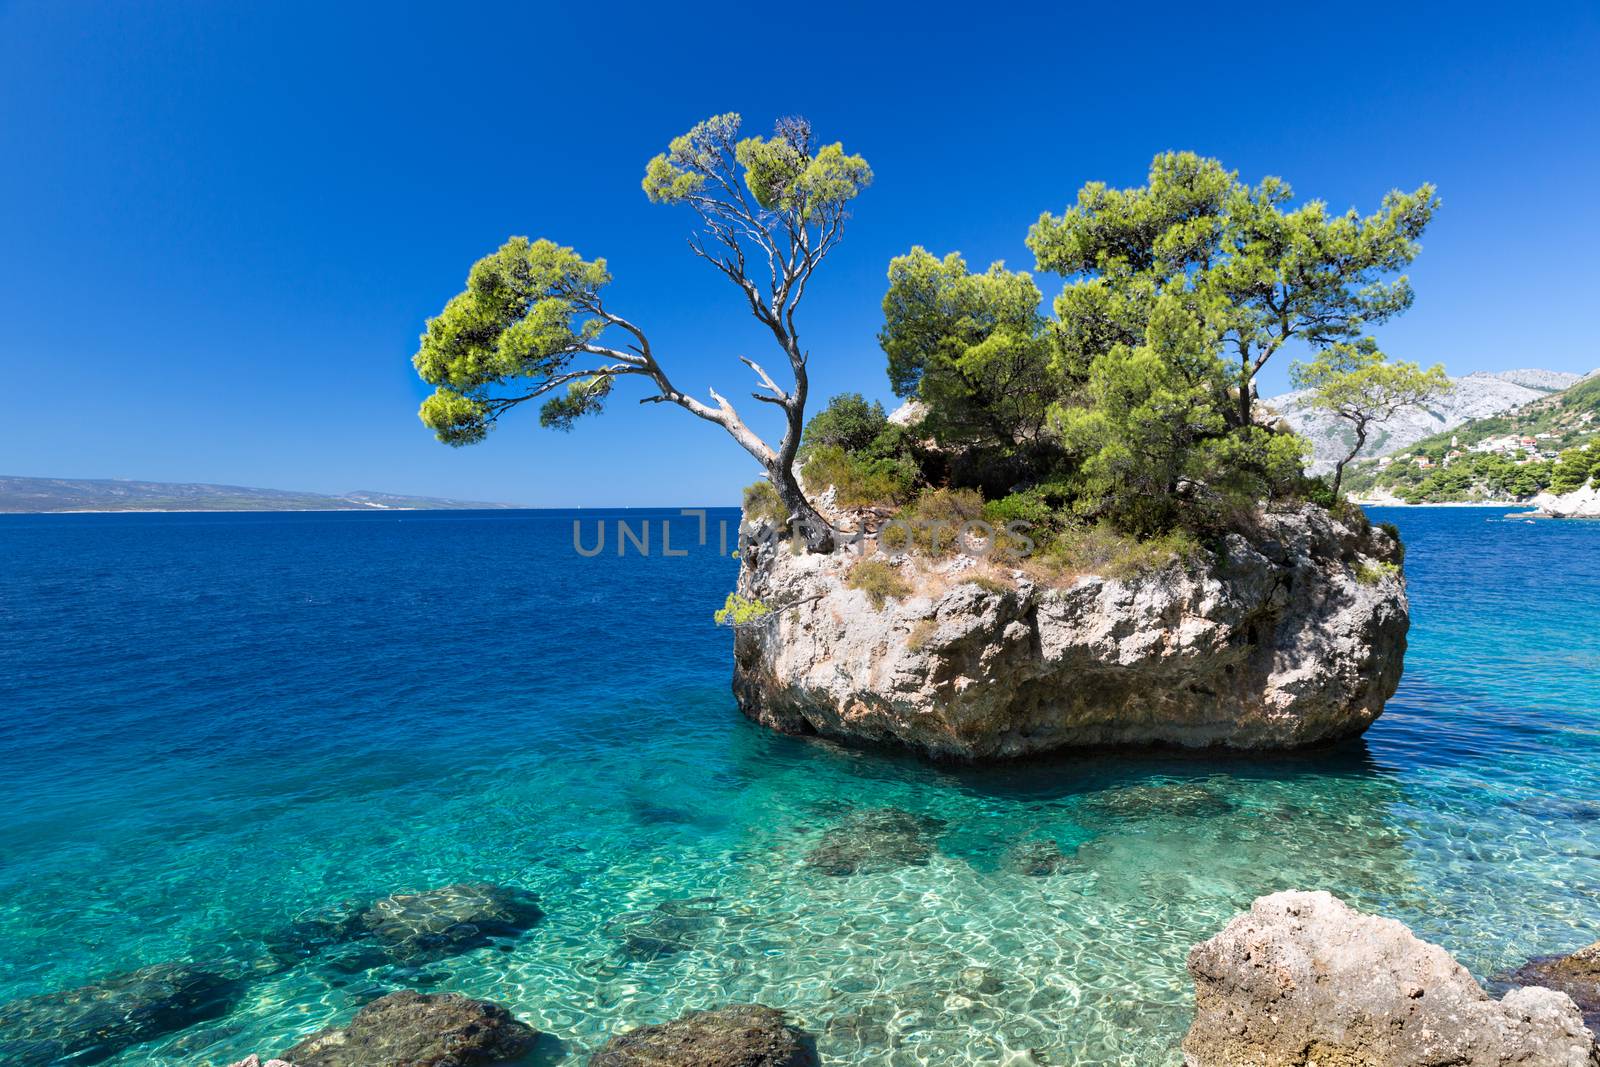 Croatian beach at a sunny day, Brela, Croatia by fisfra